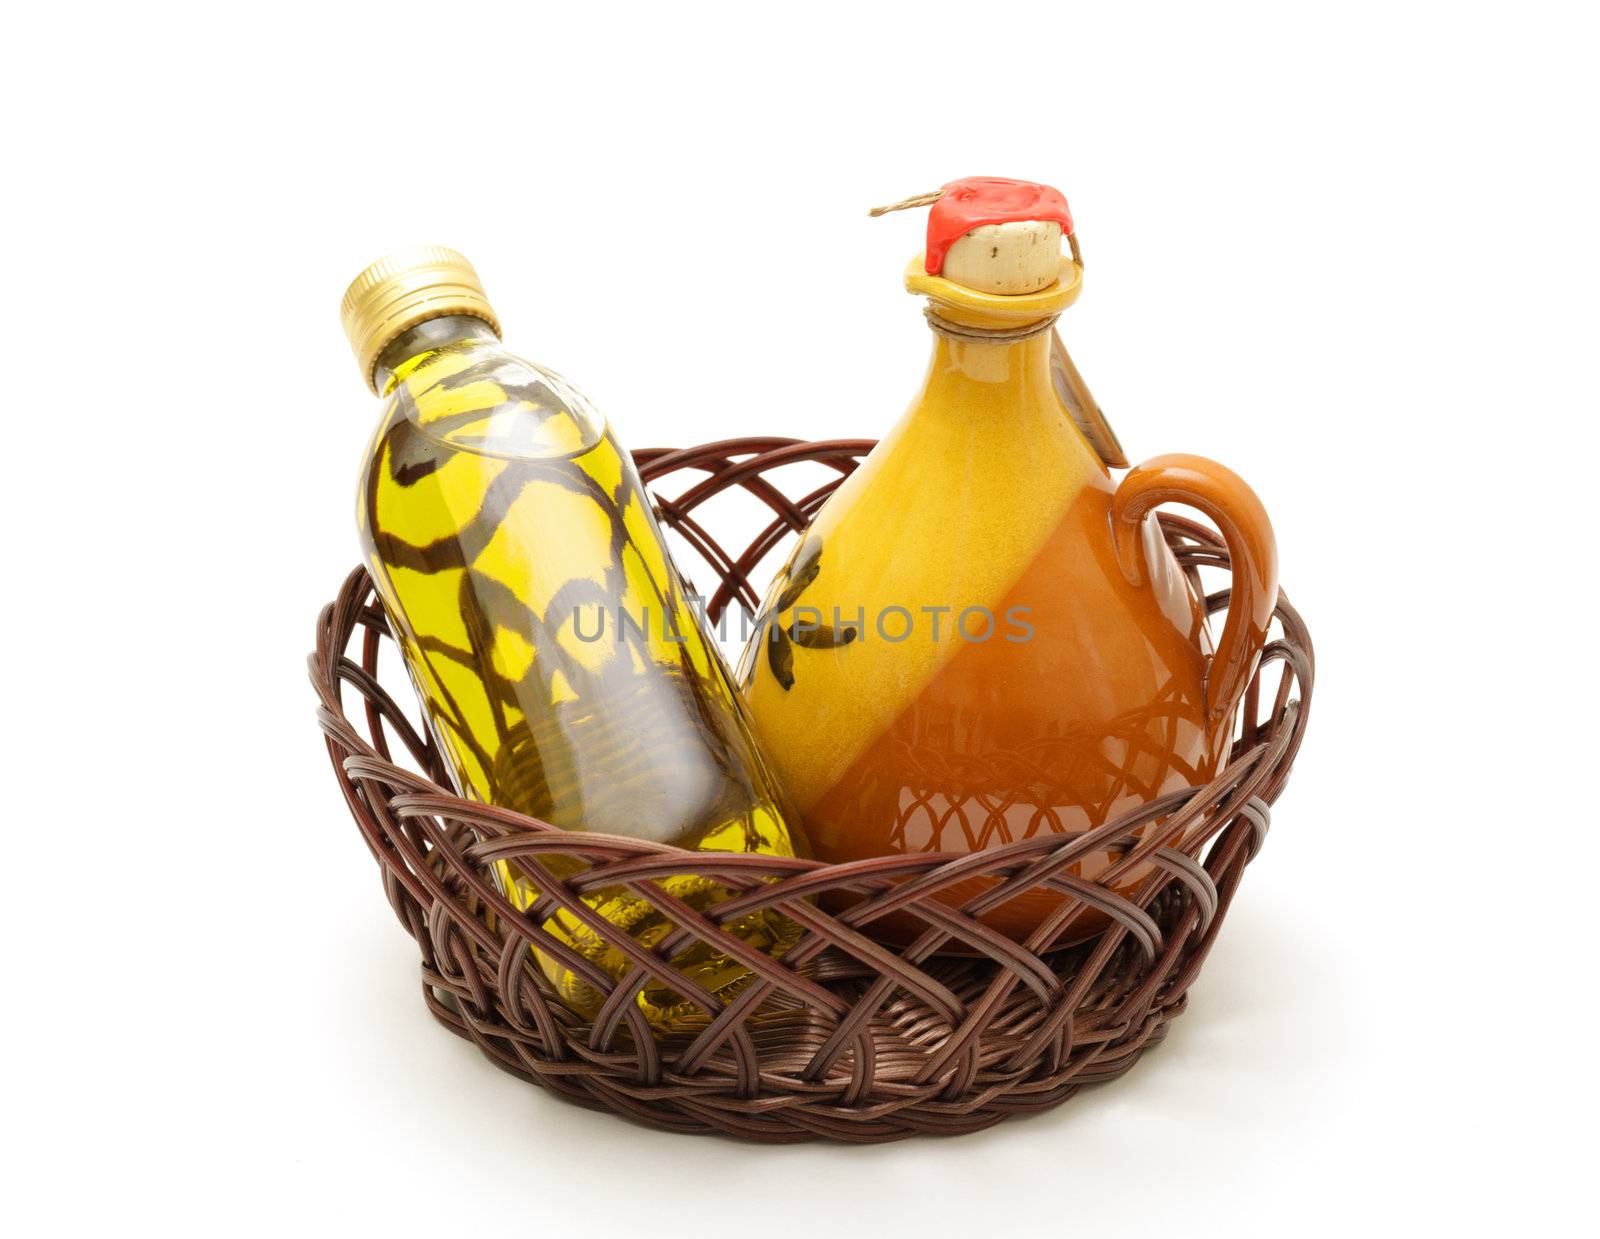 Bottle and jar of virgin olive oil in basket by Discovod